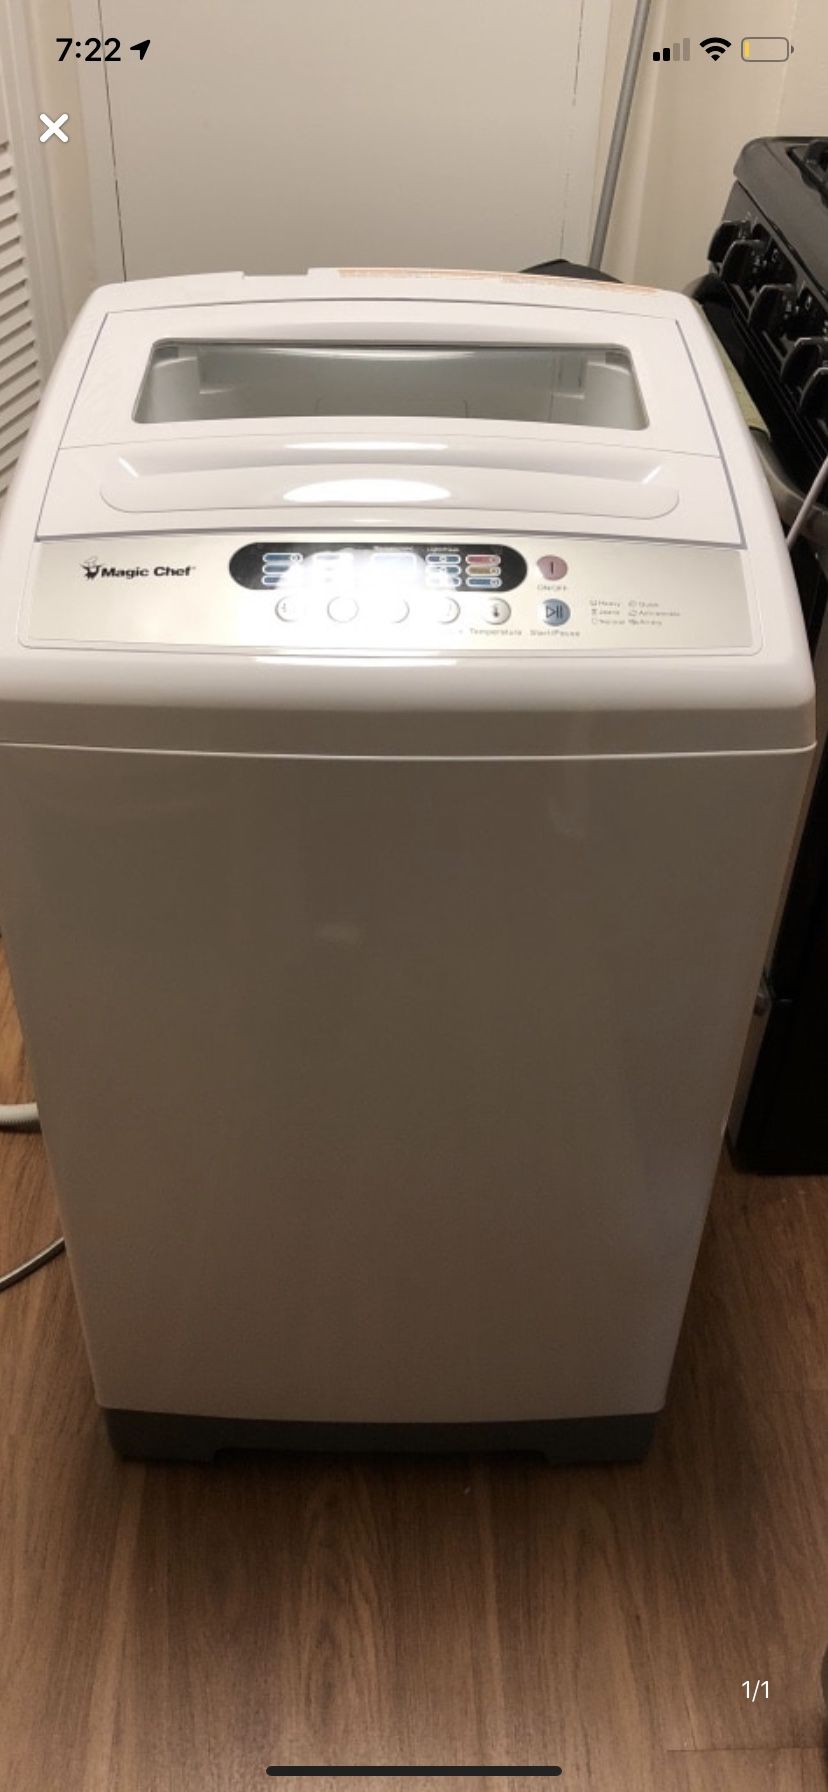 Magic Chef Portable Washing Machine